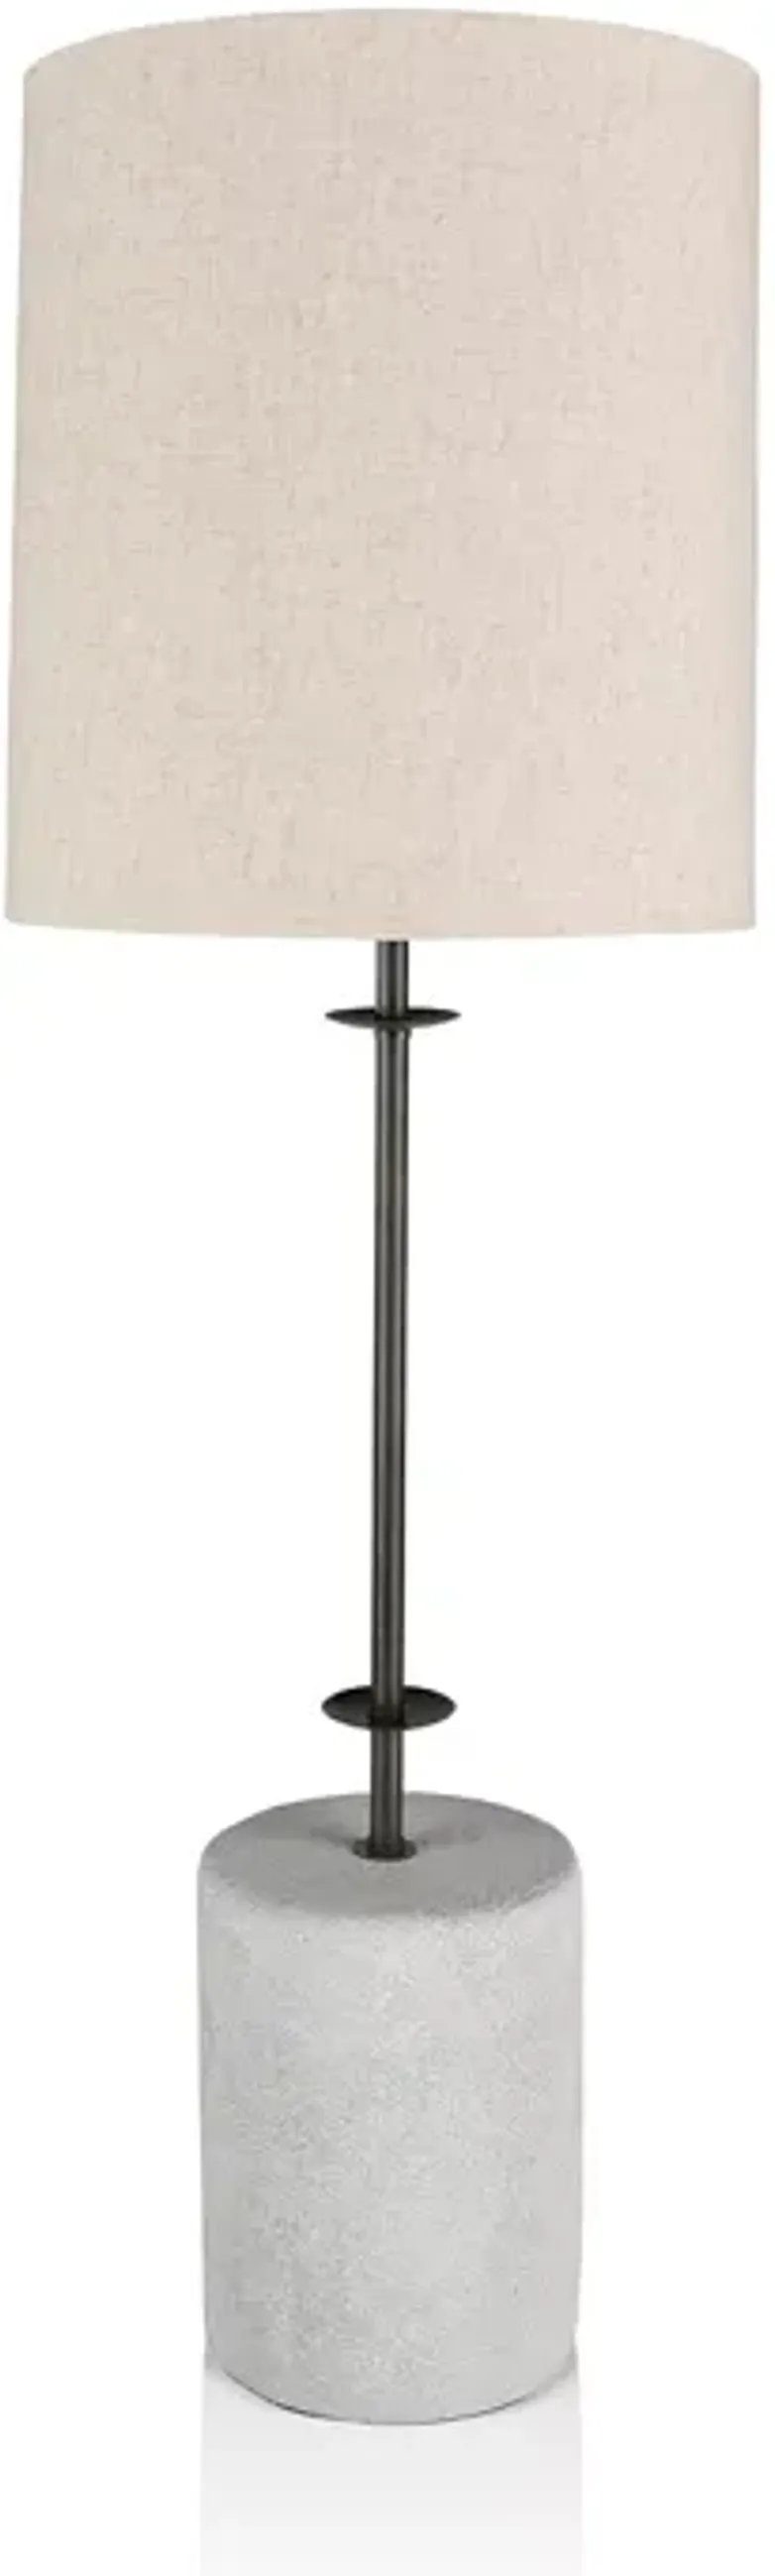 Surya Rigby Table Lamp